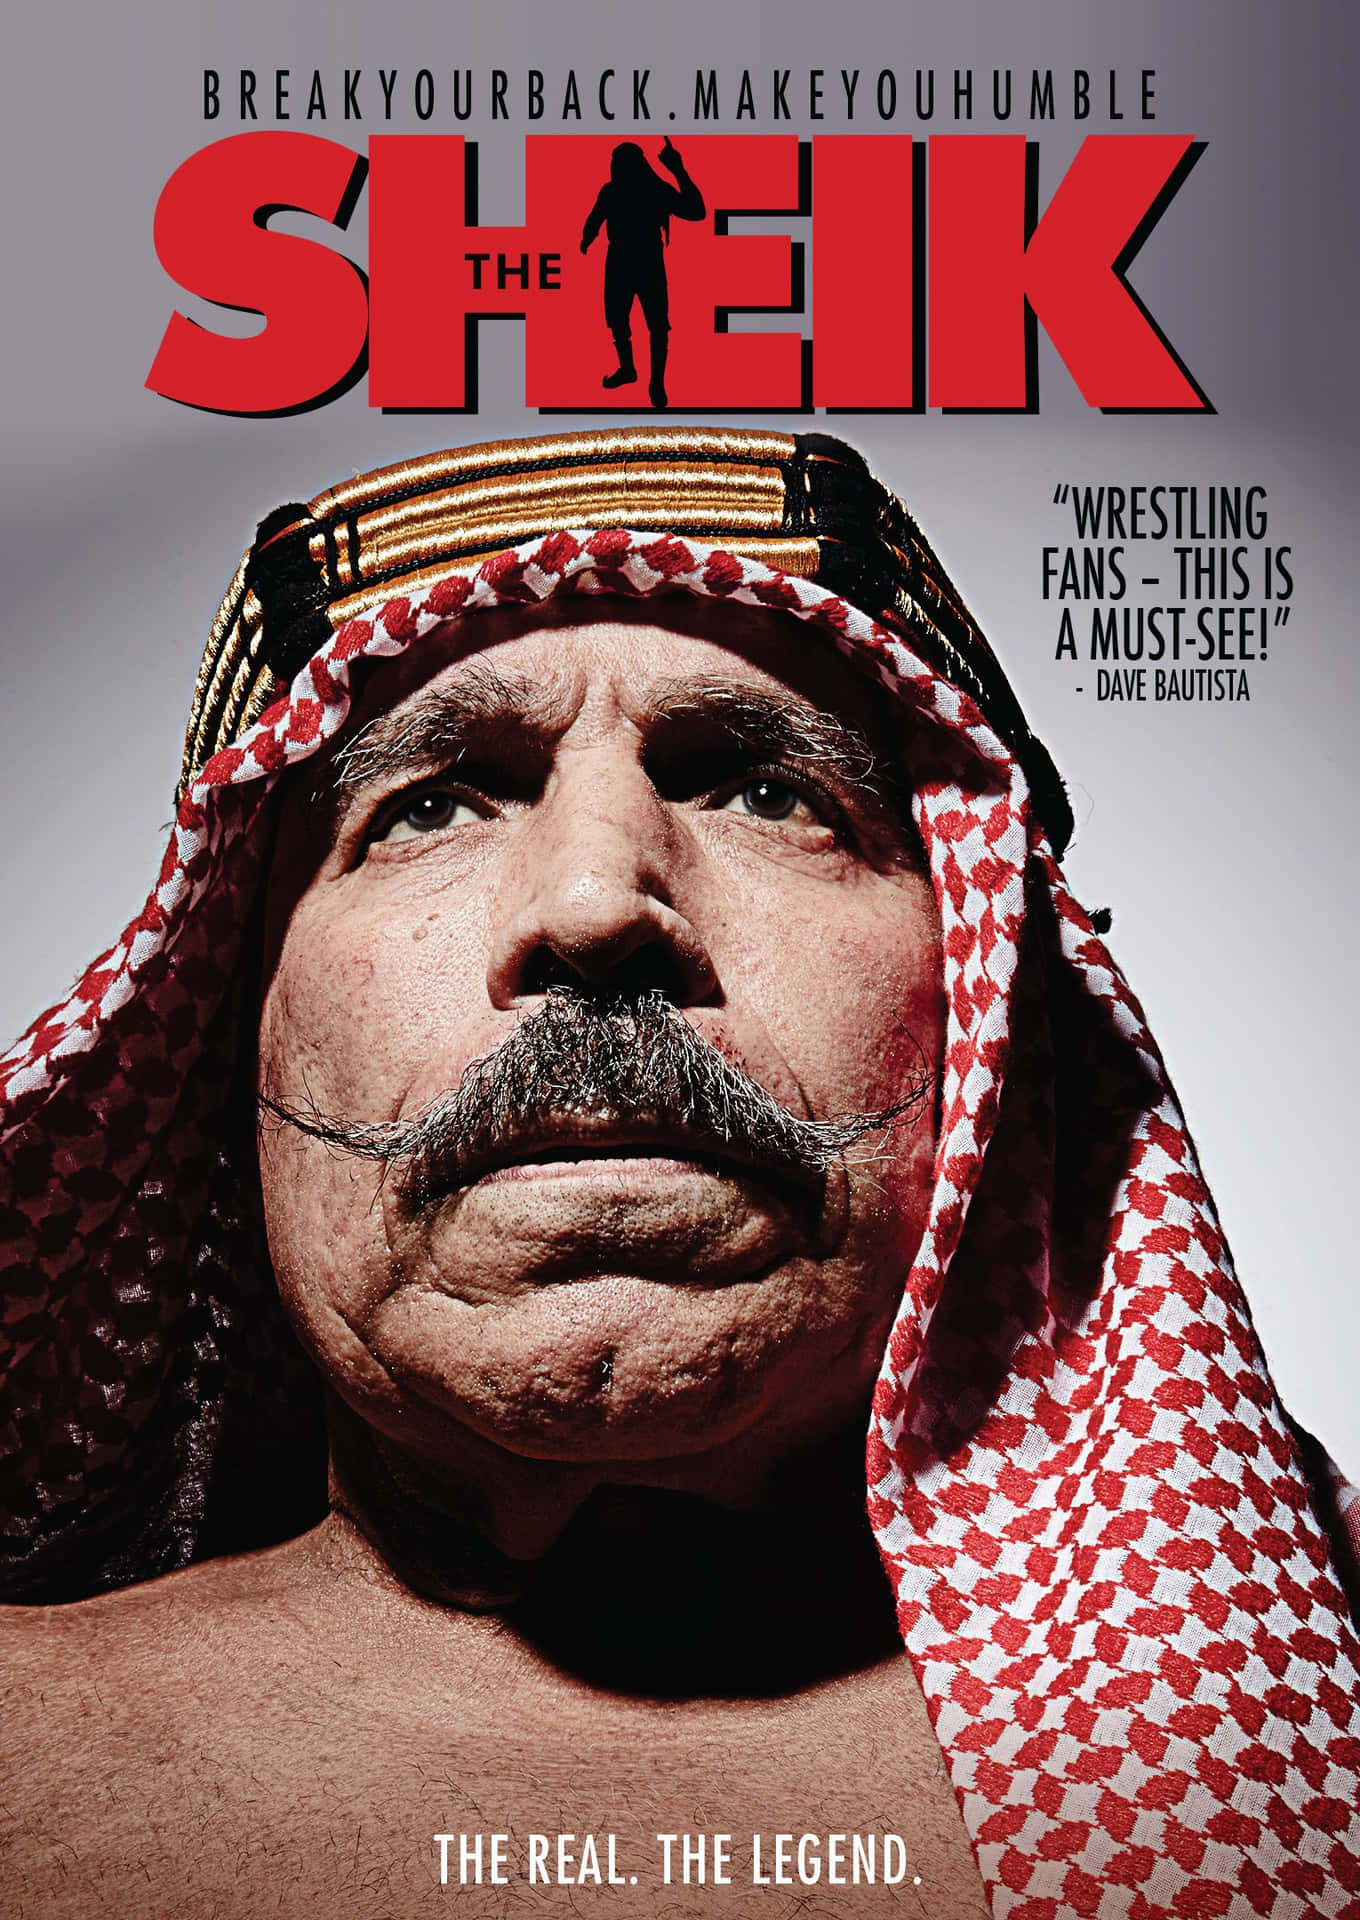 The Iron Sheik Documentary Film Wallpaper